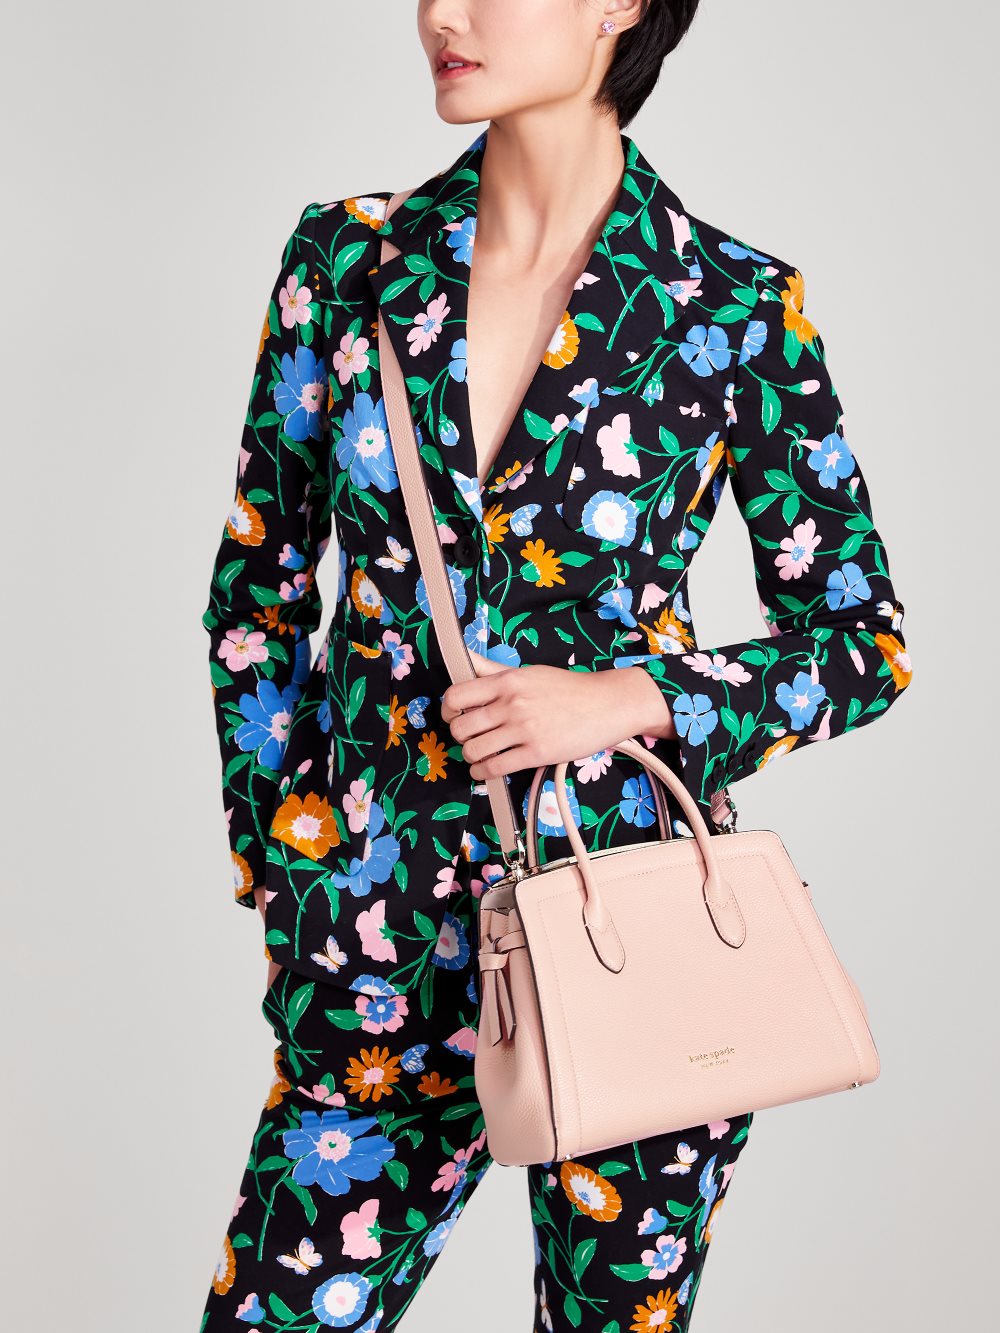 Women's coral gable knott medium satchel | Kate Spade